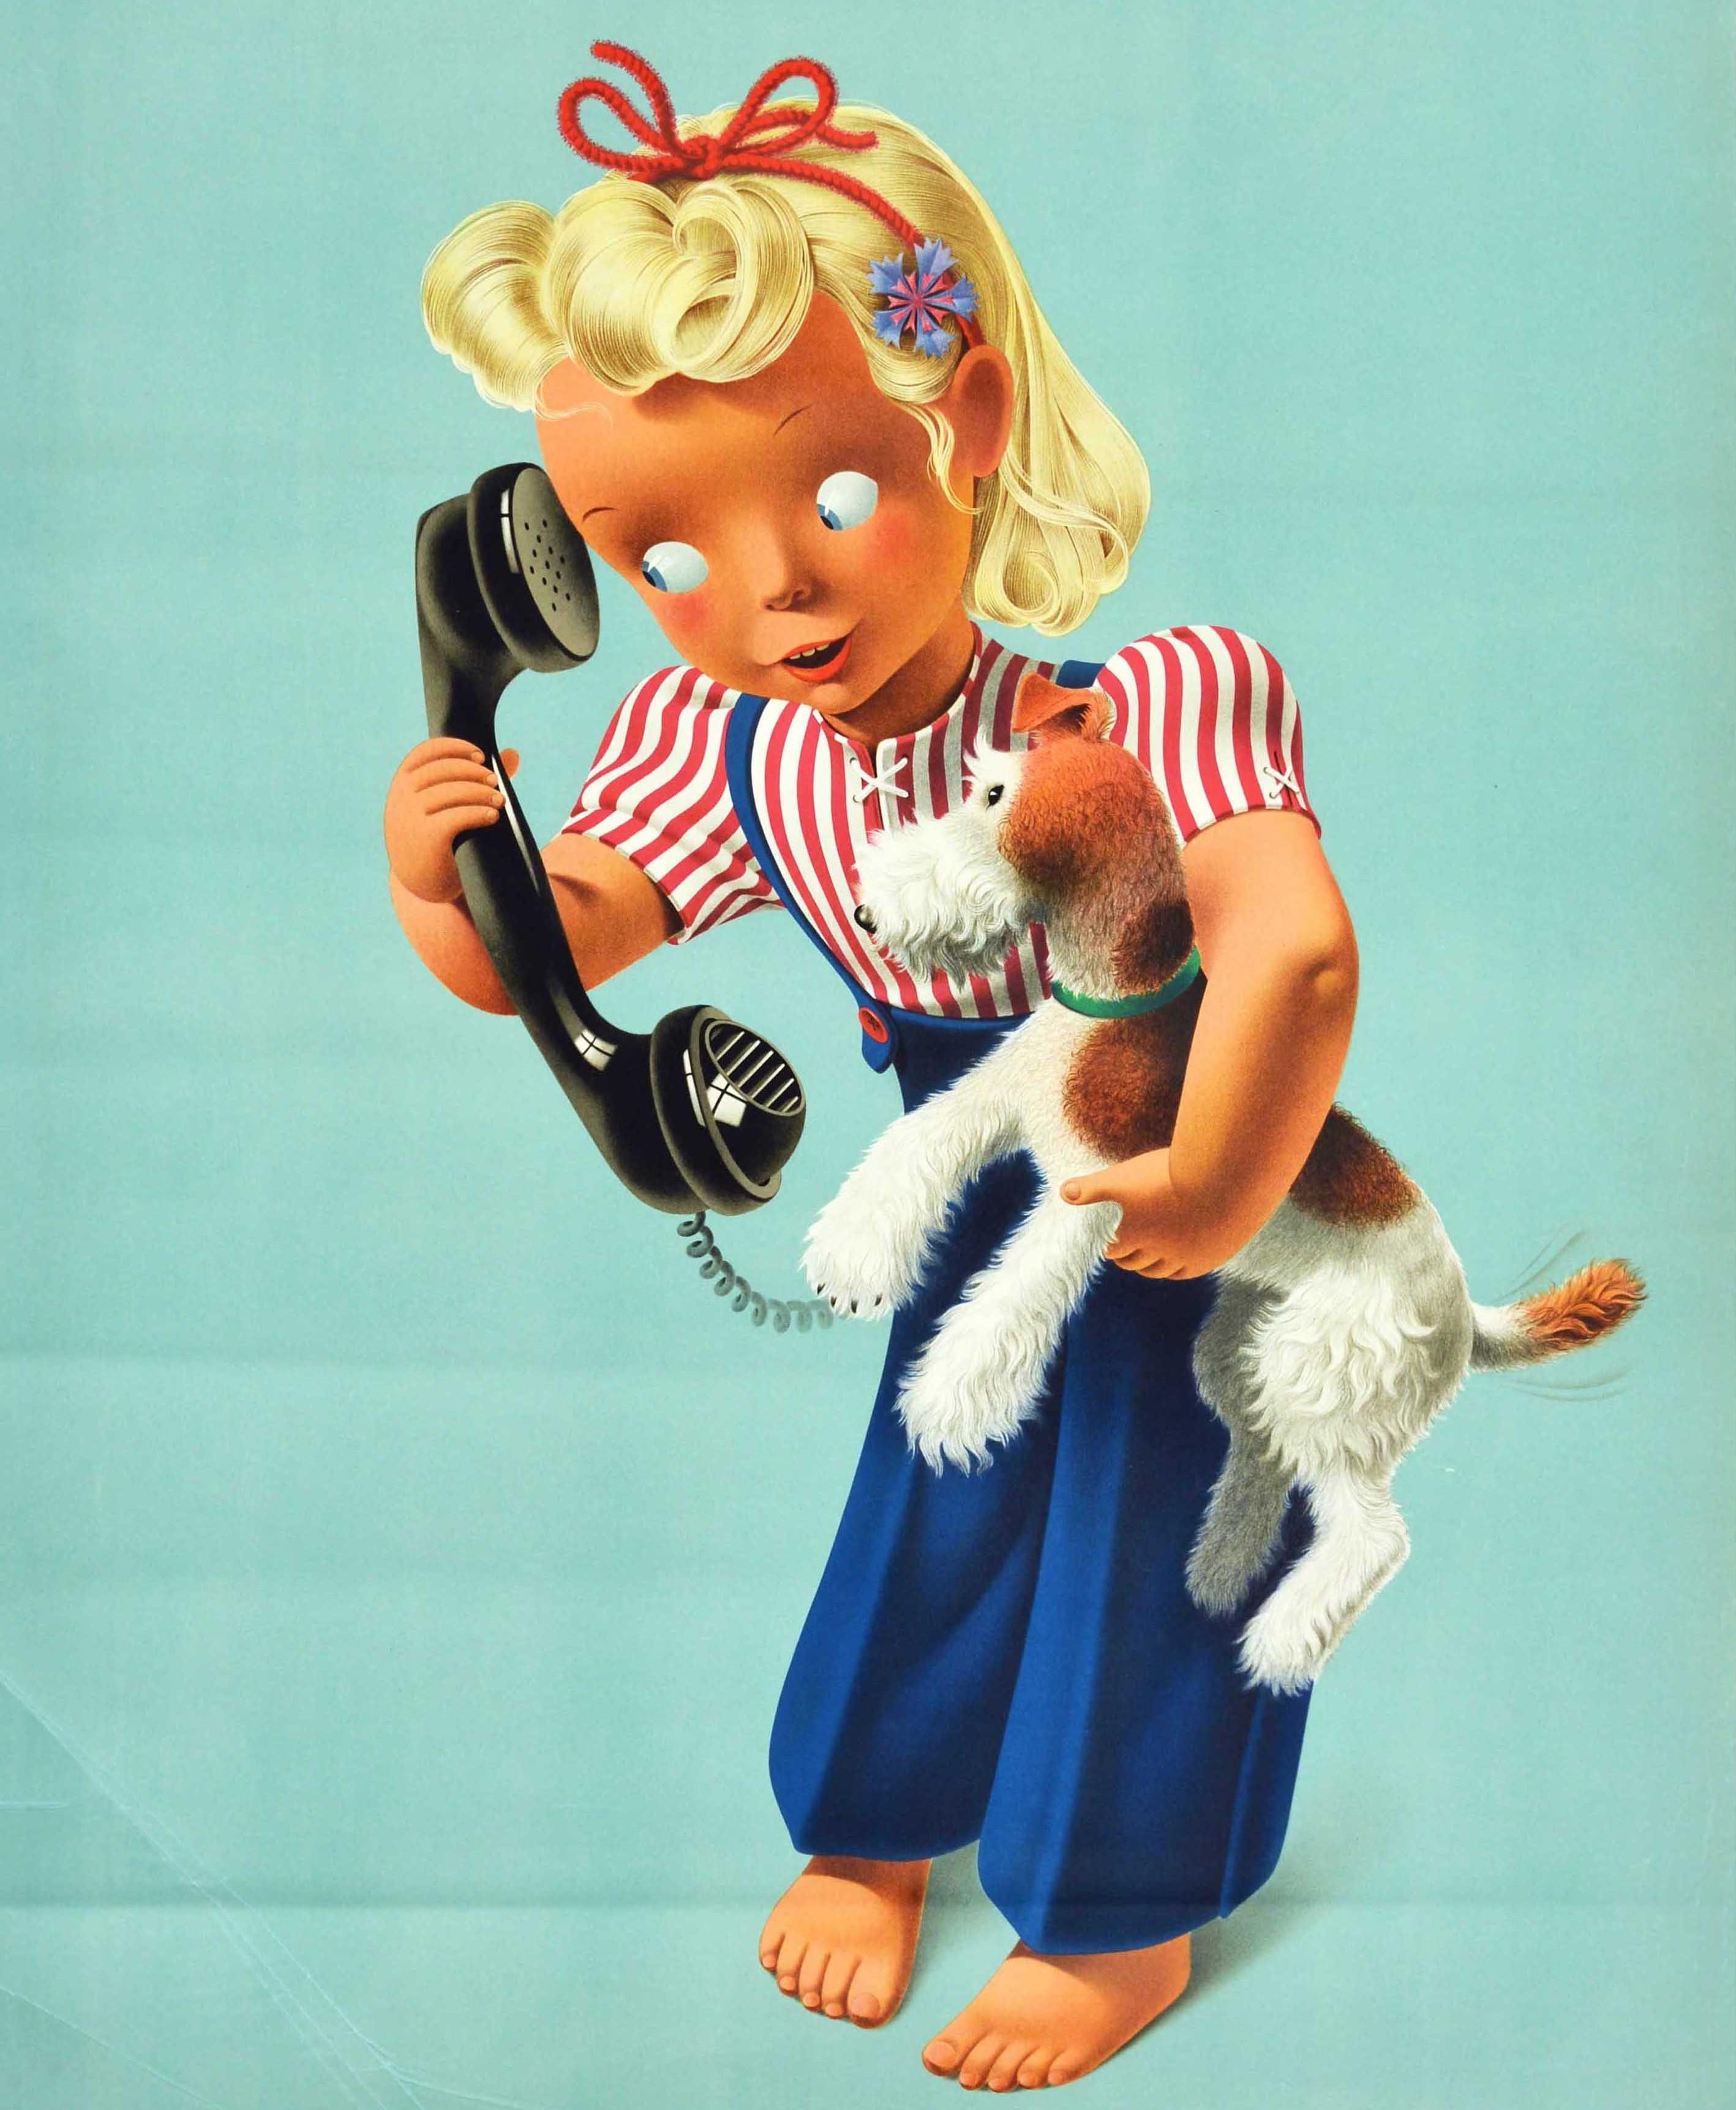 Original Vintage Poster Telephonez! Swiss Telecom Girl And Dog Advertising Art - Blue Print by Donald Brun